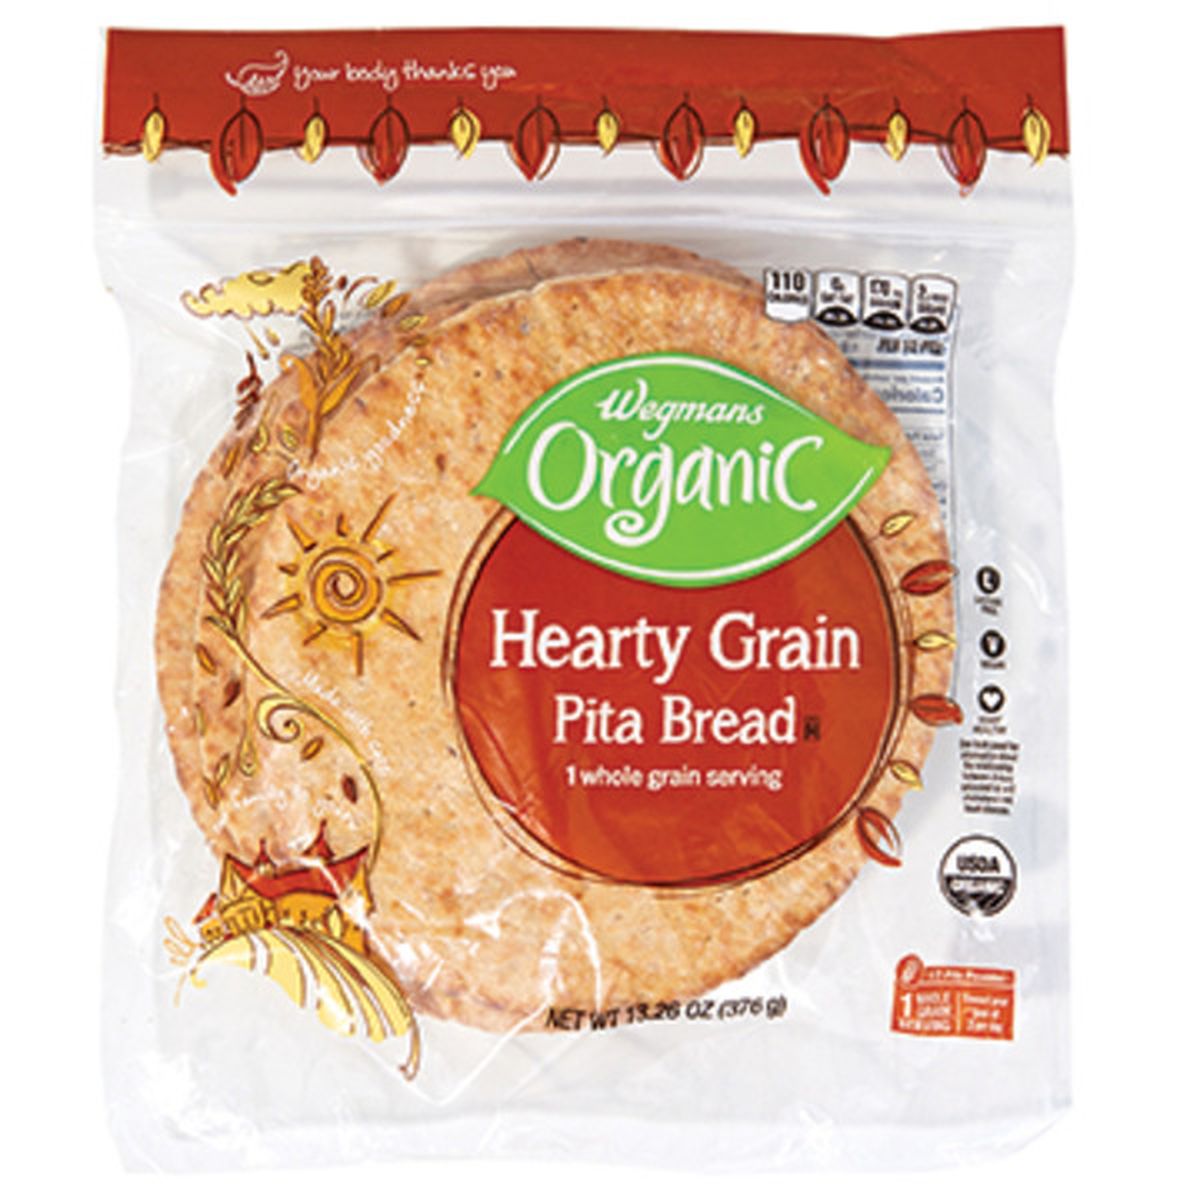 Calories in Wegmans Organic Hearty Grain Pita Bread